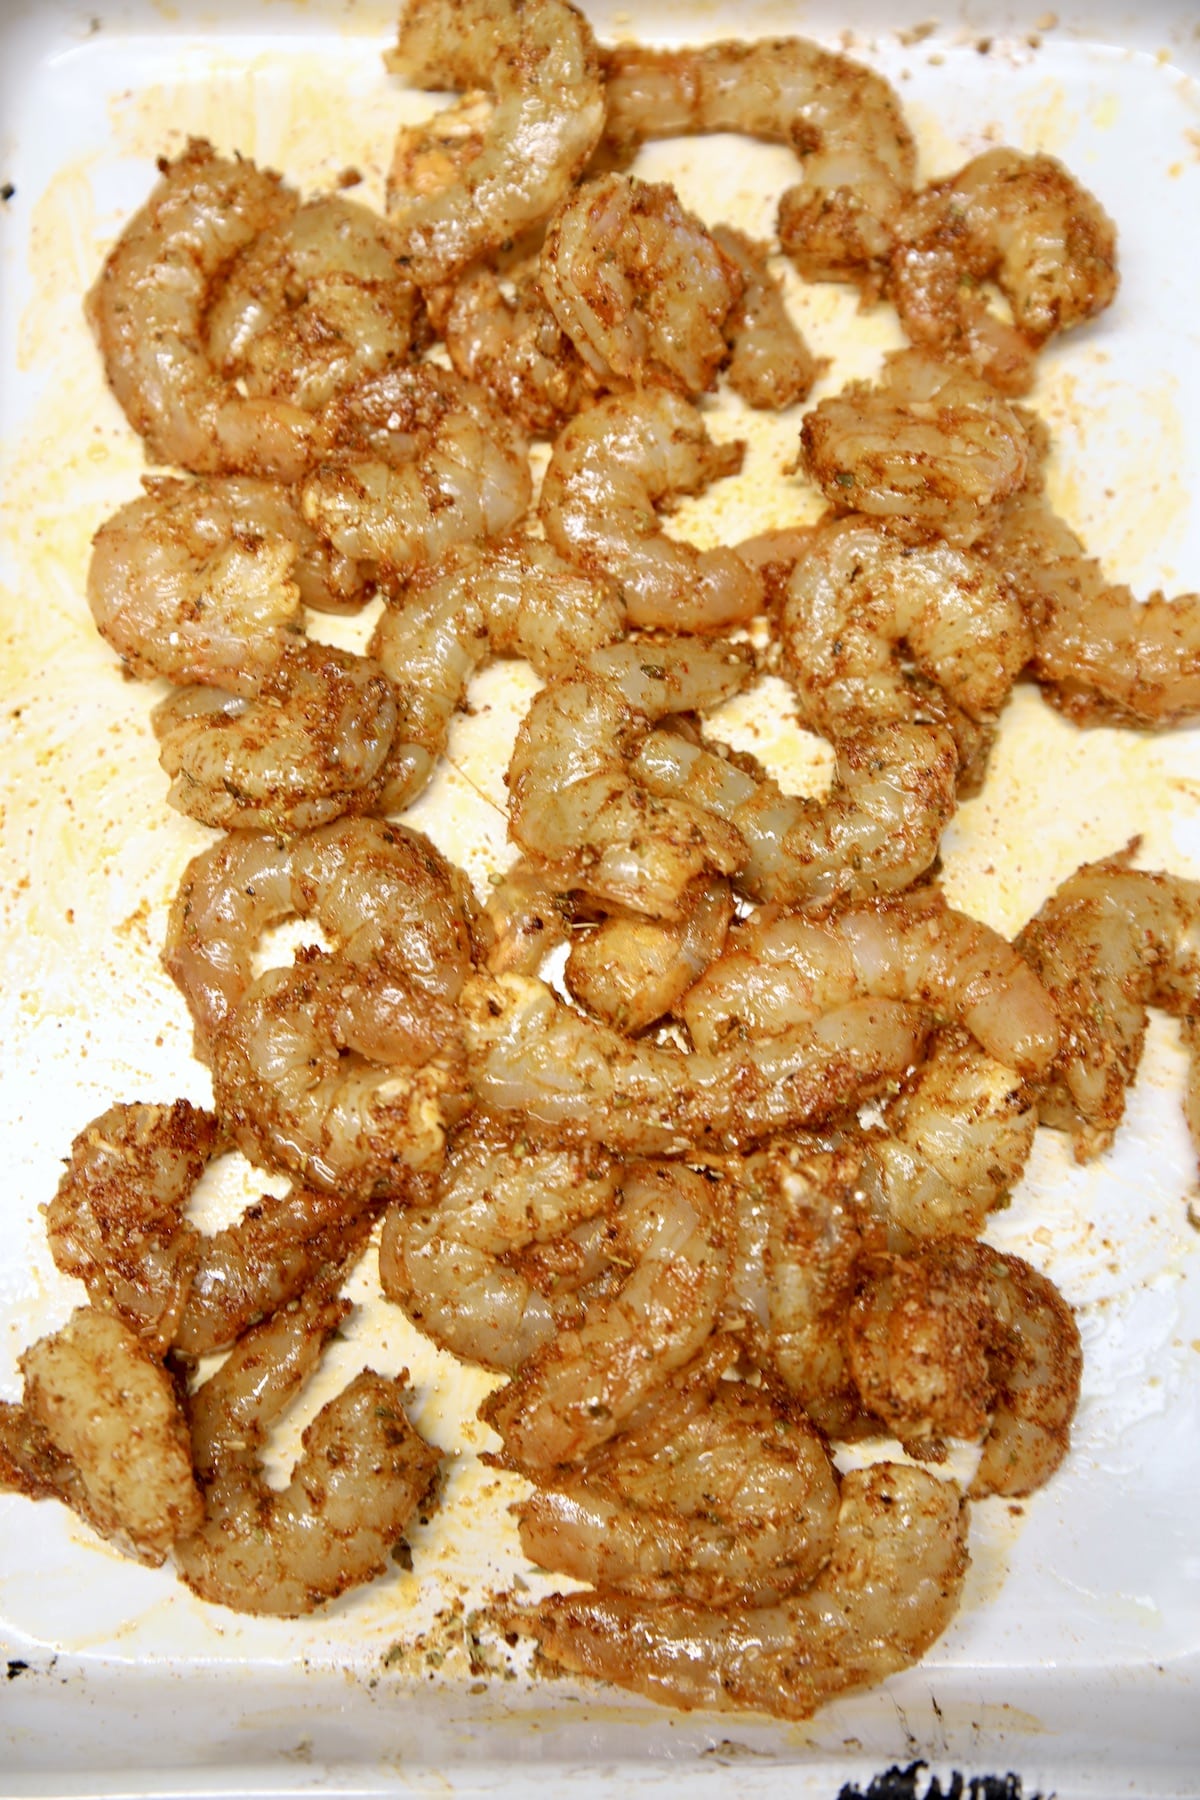 Jumbo raw shrimp tossed with seasonings.